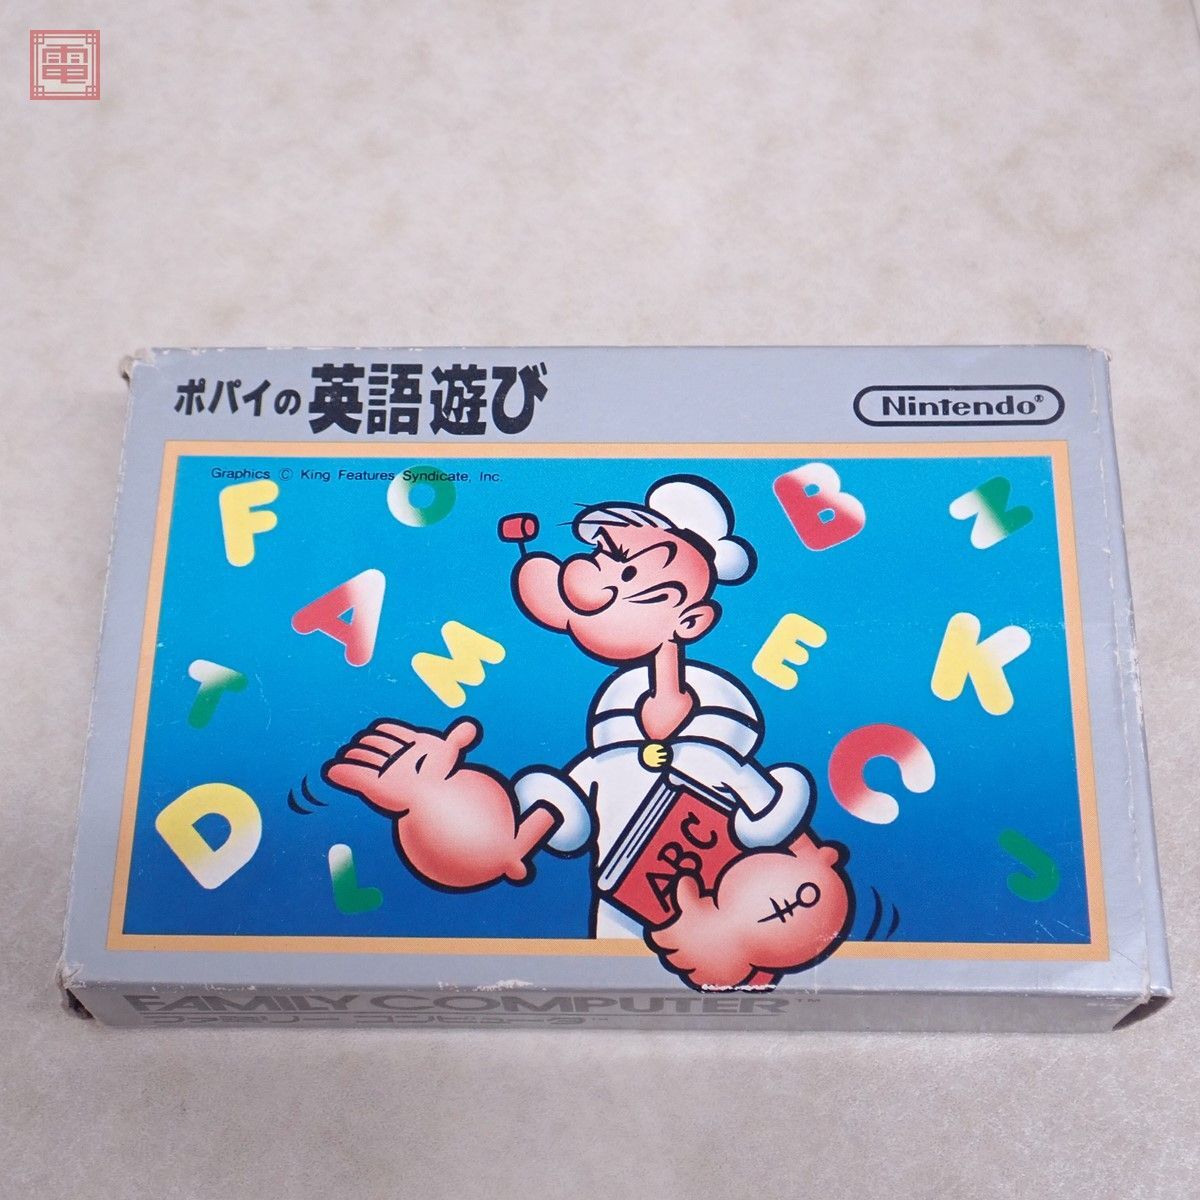 1 jpy ~ * empty box only rare rare FC Family computer Popeye. English playing silver box Nintendo nintendo Nintendo[10